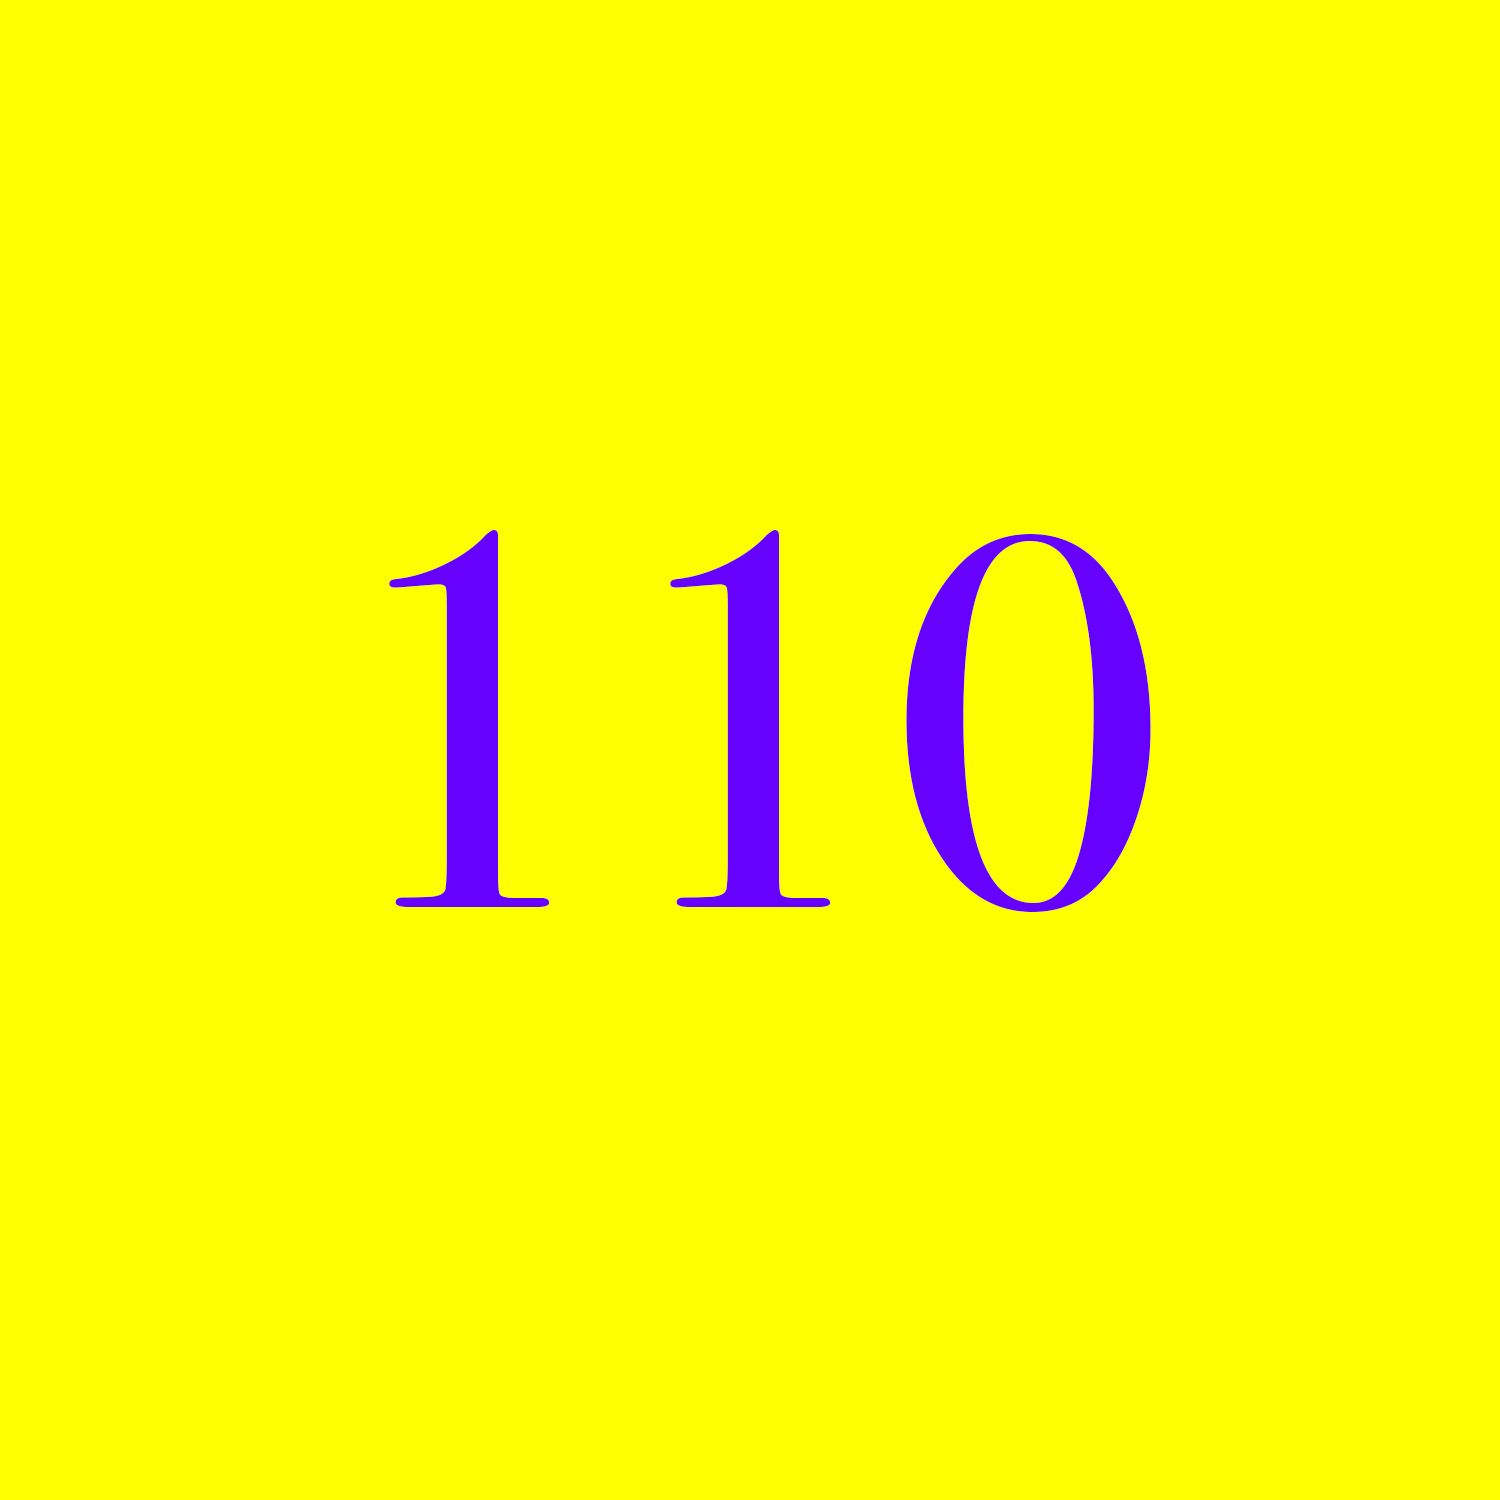 sala 110